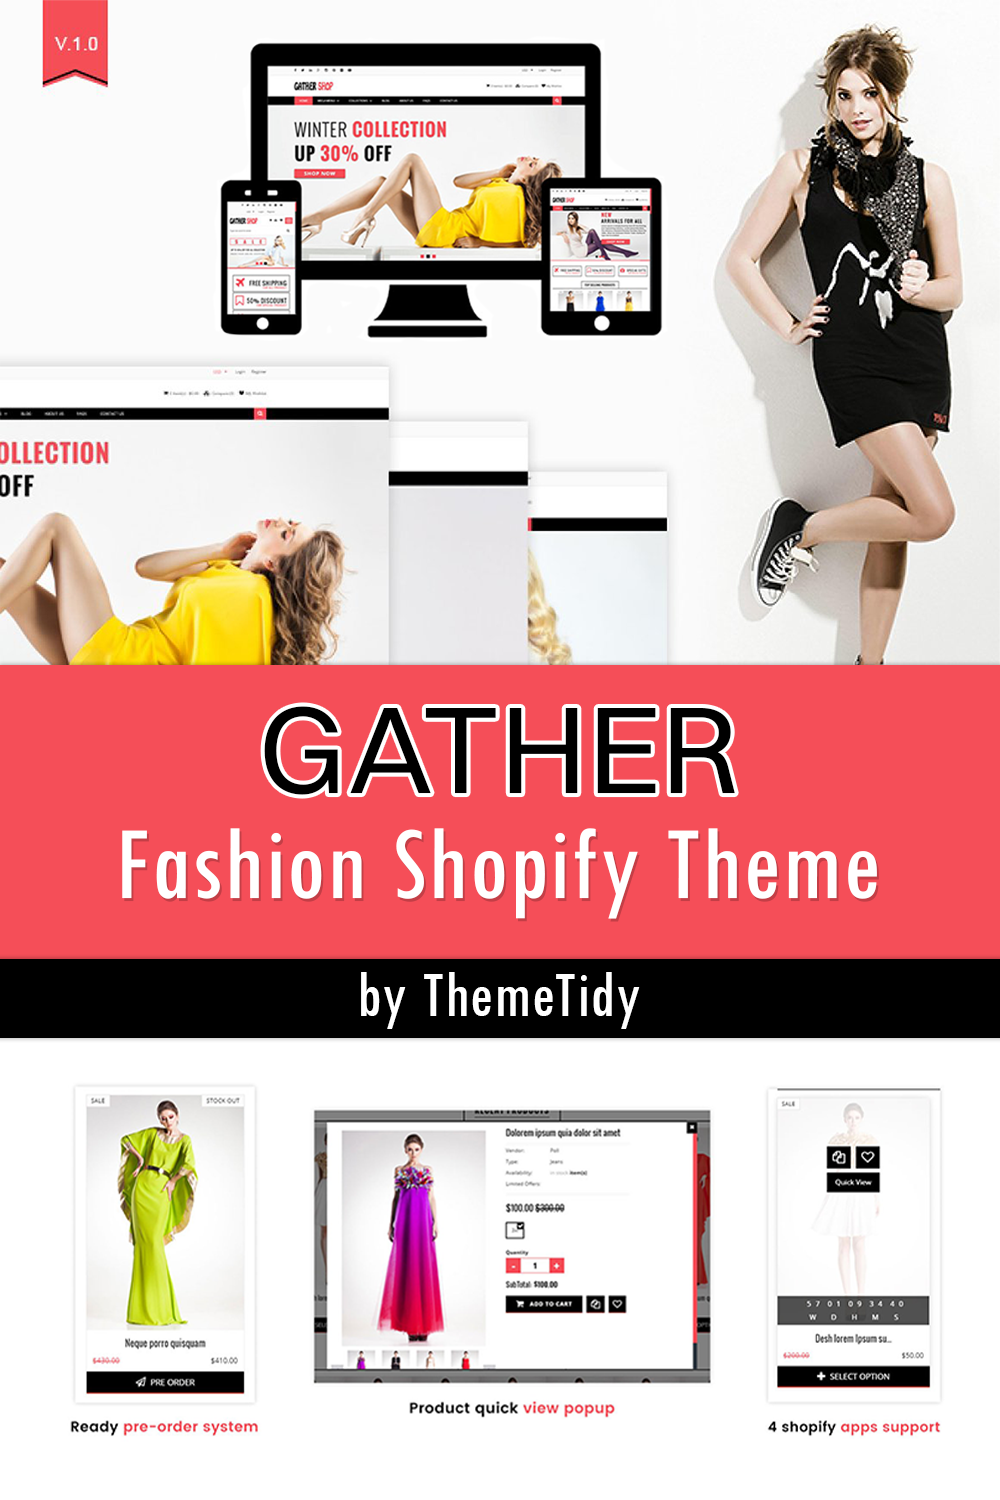 Gather fashion shopify theme images of pinterest.